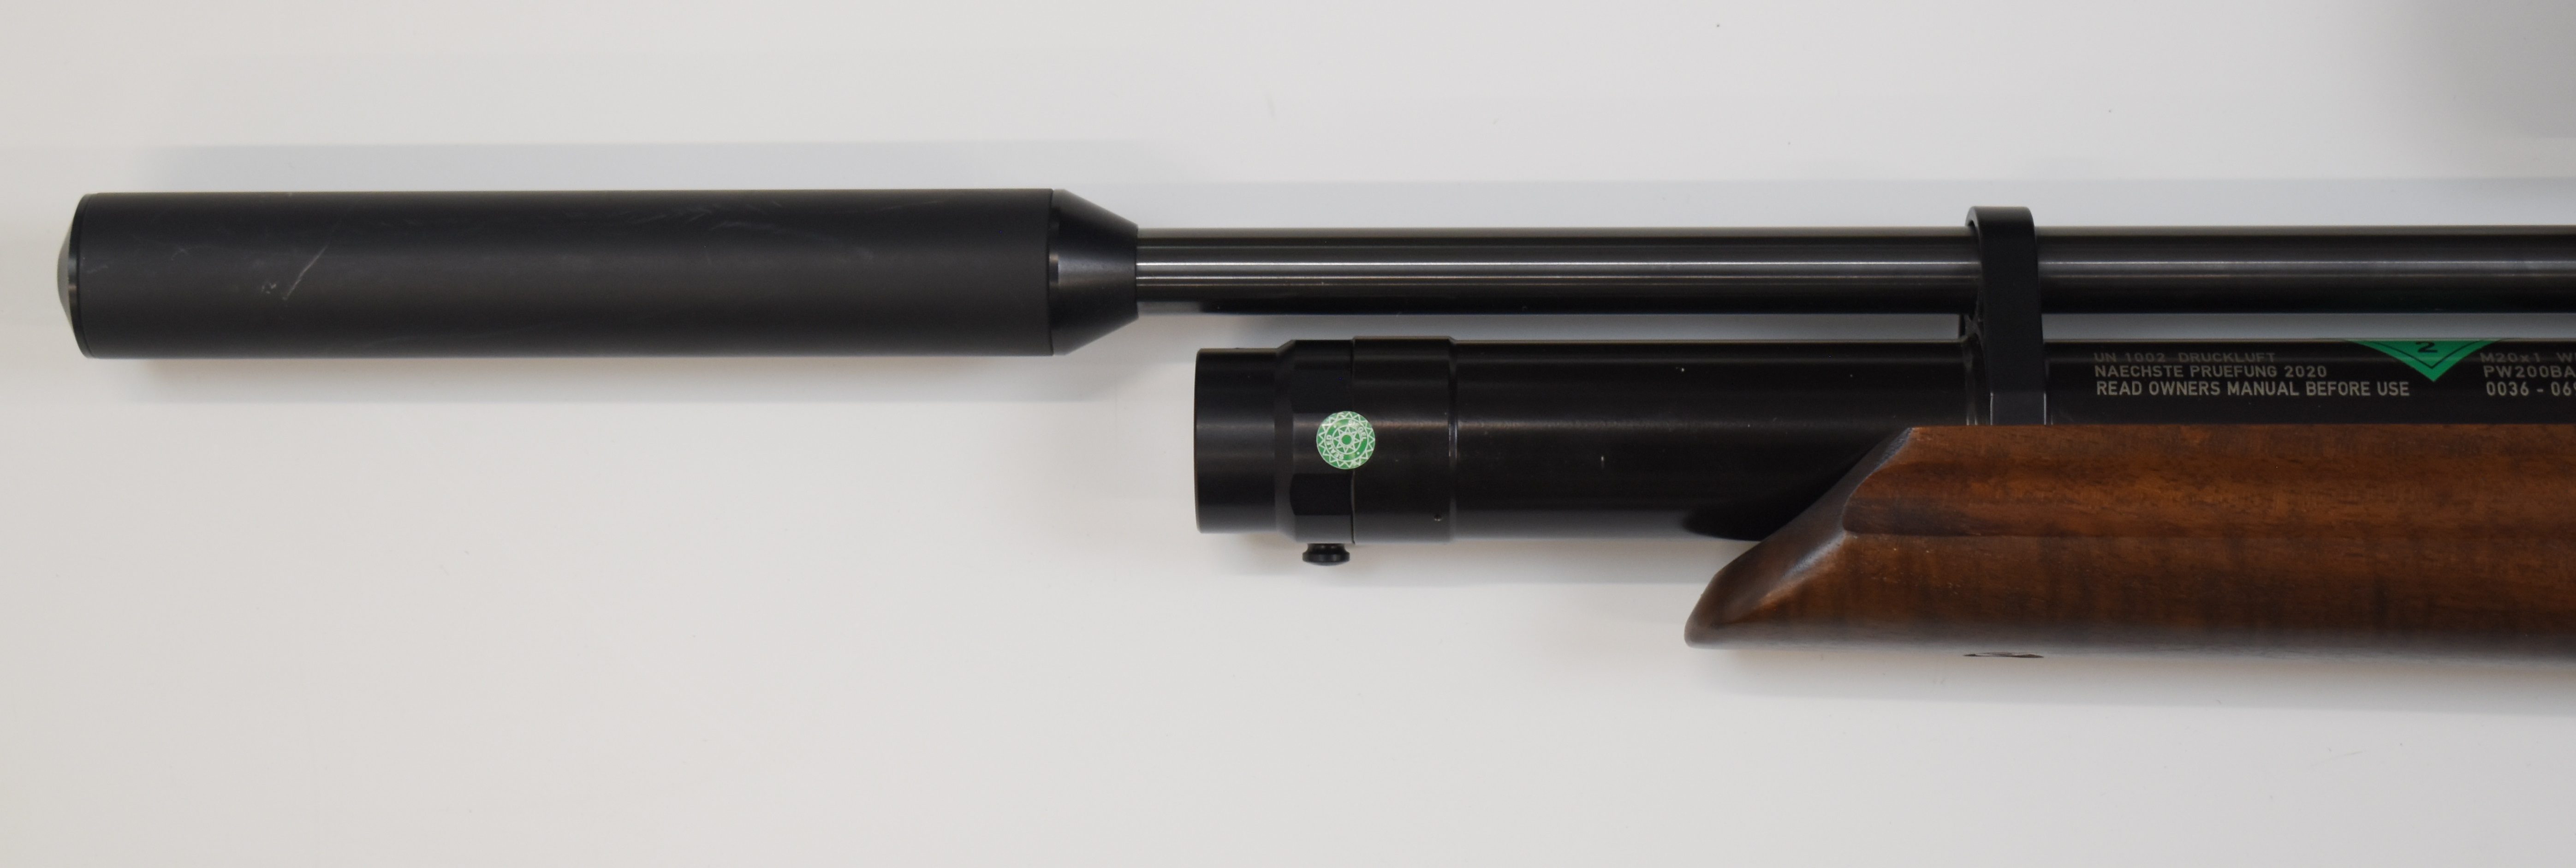 Weihrauch HW100 .177 PCP air rifle with textured semi-pistol grip, raised cheek piece, adjustable - Image 9 of 10